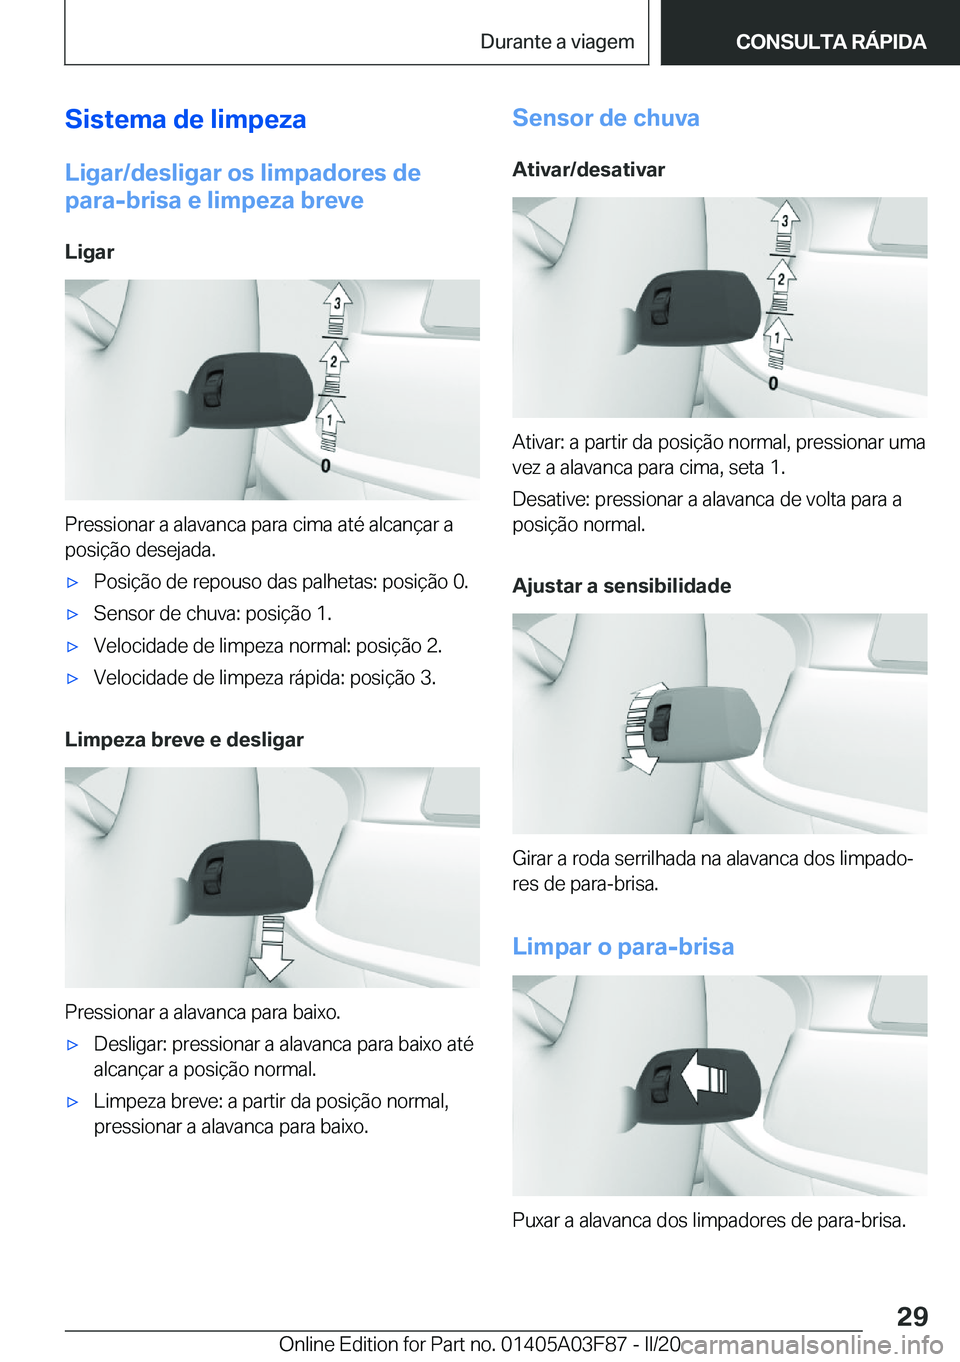 BMW 3 SERIES 2020  Manual do condutor (in Portuguese) �S�i�s�t�e�m�a��d�e��l�i�m�p�e�z�a
�L�i�g�a�r�/�d�e�s�l�i�g�a�r��o�s��l�i�m�p�a�d�o�r�e�s��d�e �p�a�r�a�-�b�r�i�s�a��e��l�i�m�p�e�z�a��b�r�e�v�e
�L�i�g�a�r
�P�r�e�s�s�i�o�n�a�r��a��a�l�a�v�a